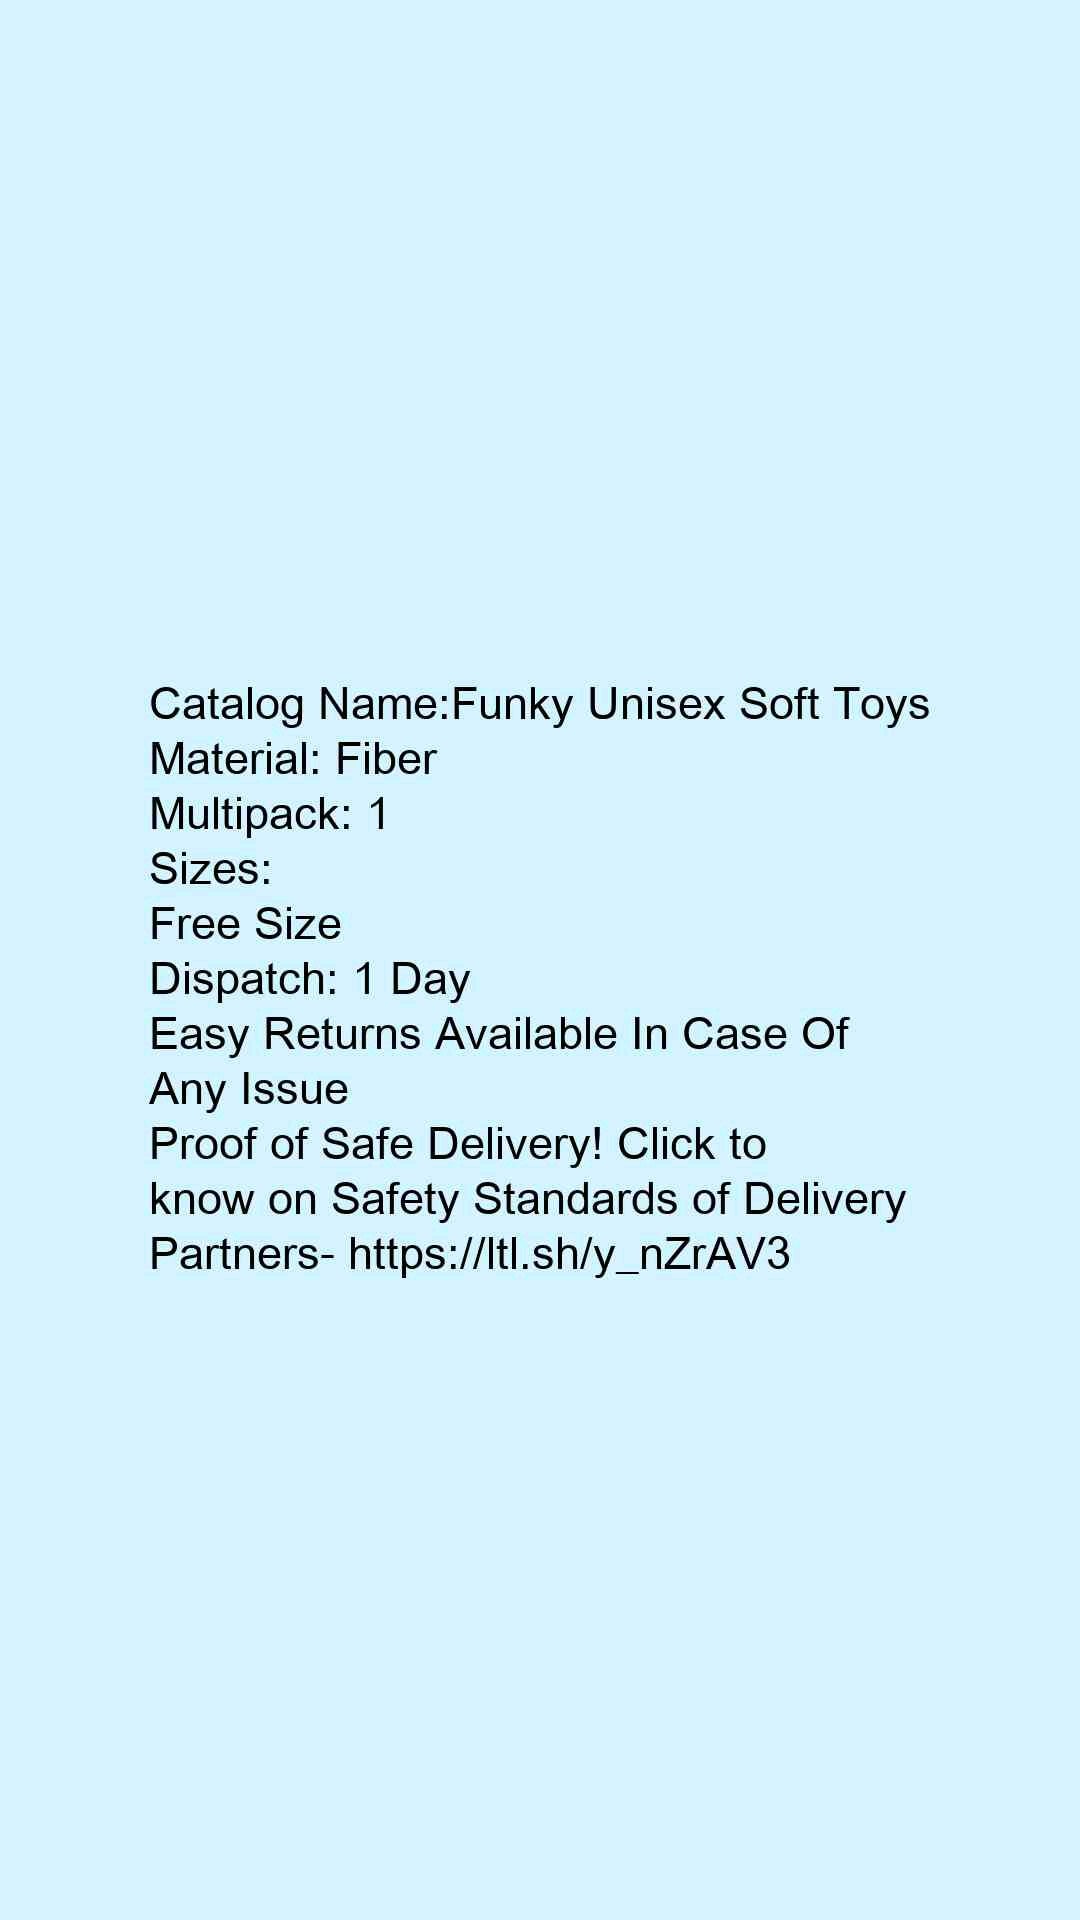 Funky Unisex Soft Toys - Faritha